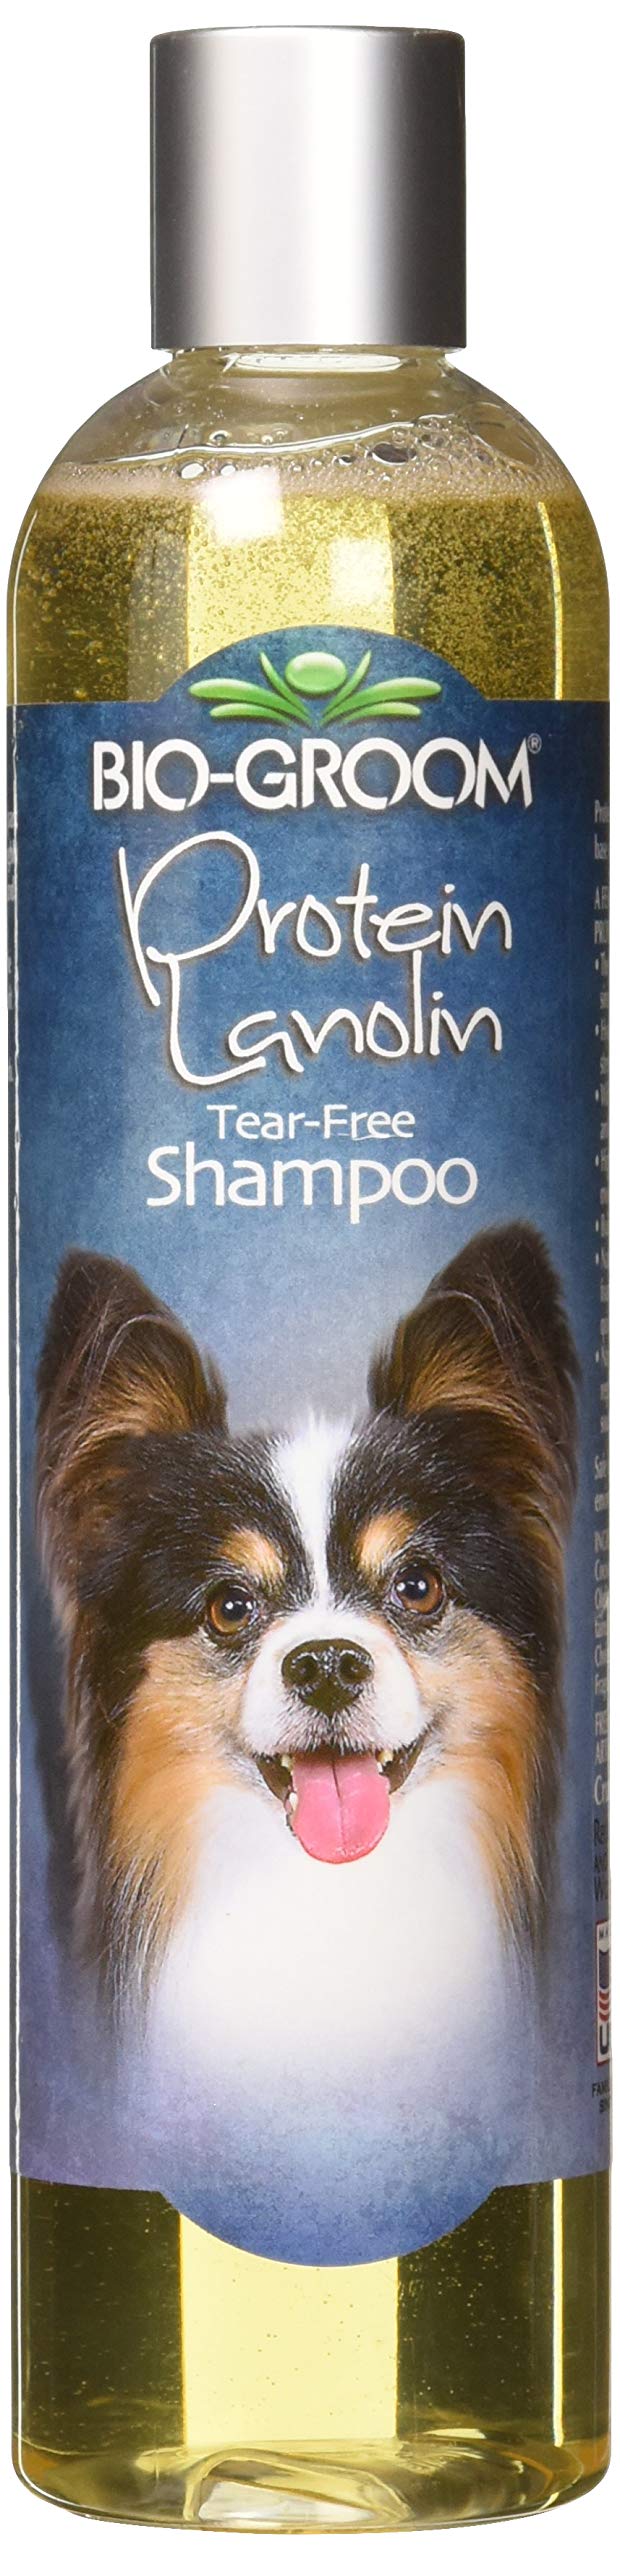 [Australia] - Bio-Groom DBB20012 Protein Lanolin Tearless Concentrate Small Pet Shampoo, 12-Ounce 